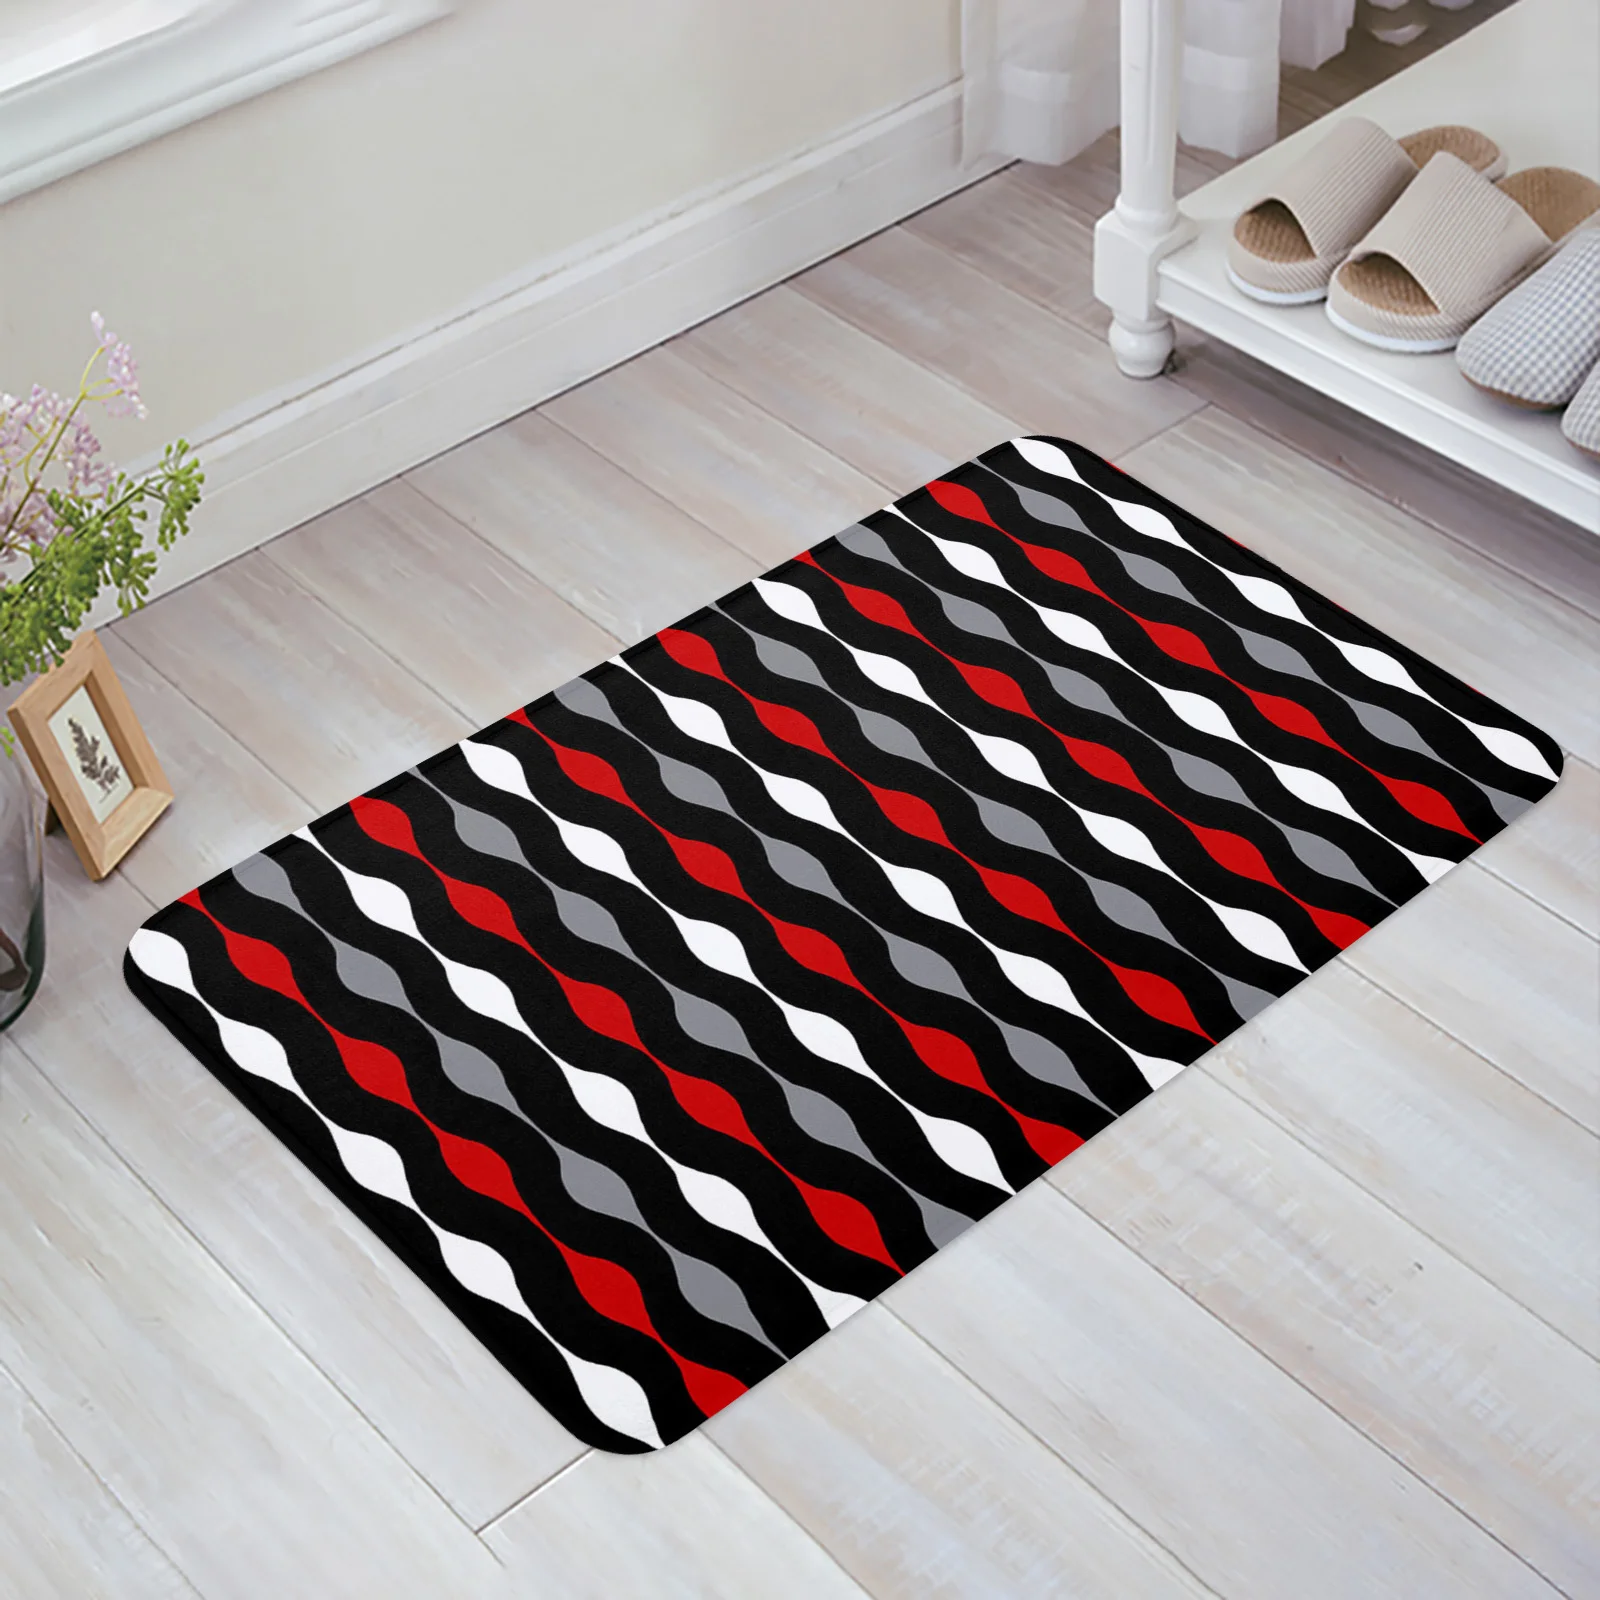 Geometric Stripes Red Black White Entrance Doormat Kitchen Mat Home Decor Bedroom Carpet Bath Anti-Slip Floor Mat